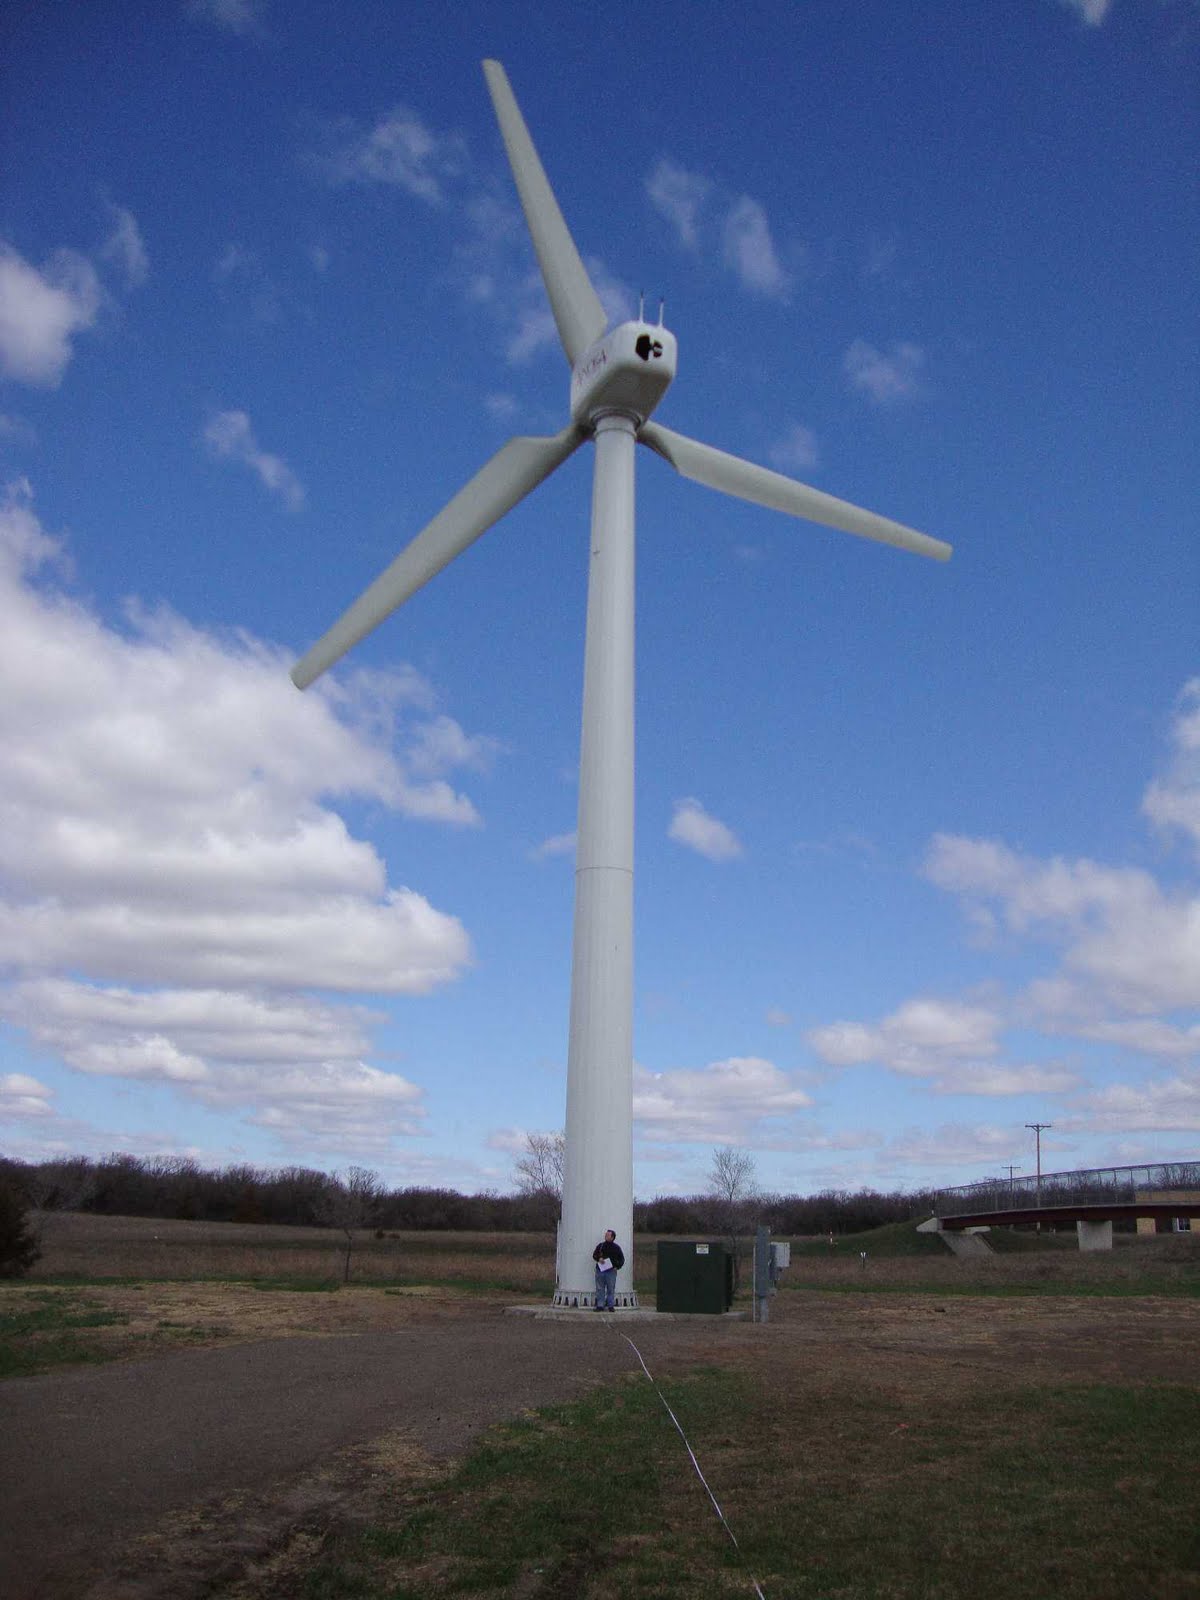 Scale demo: person in front of wind turbine